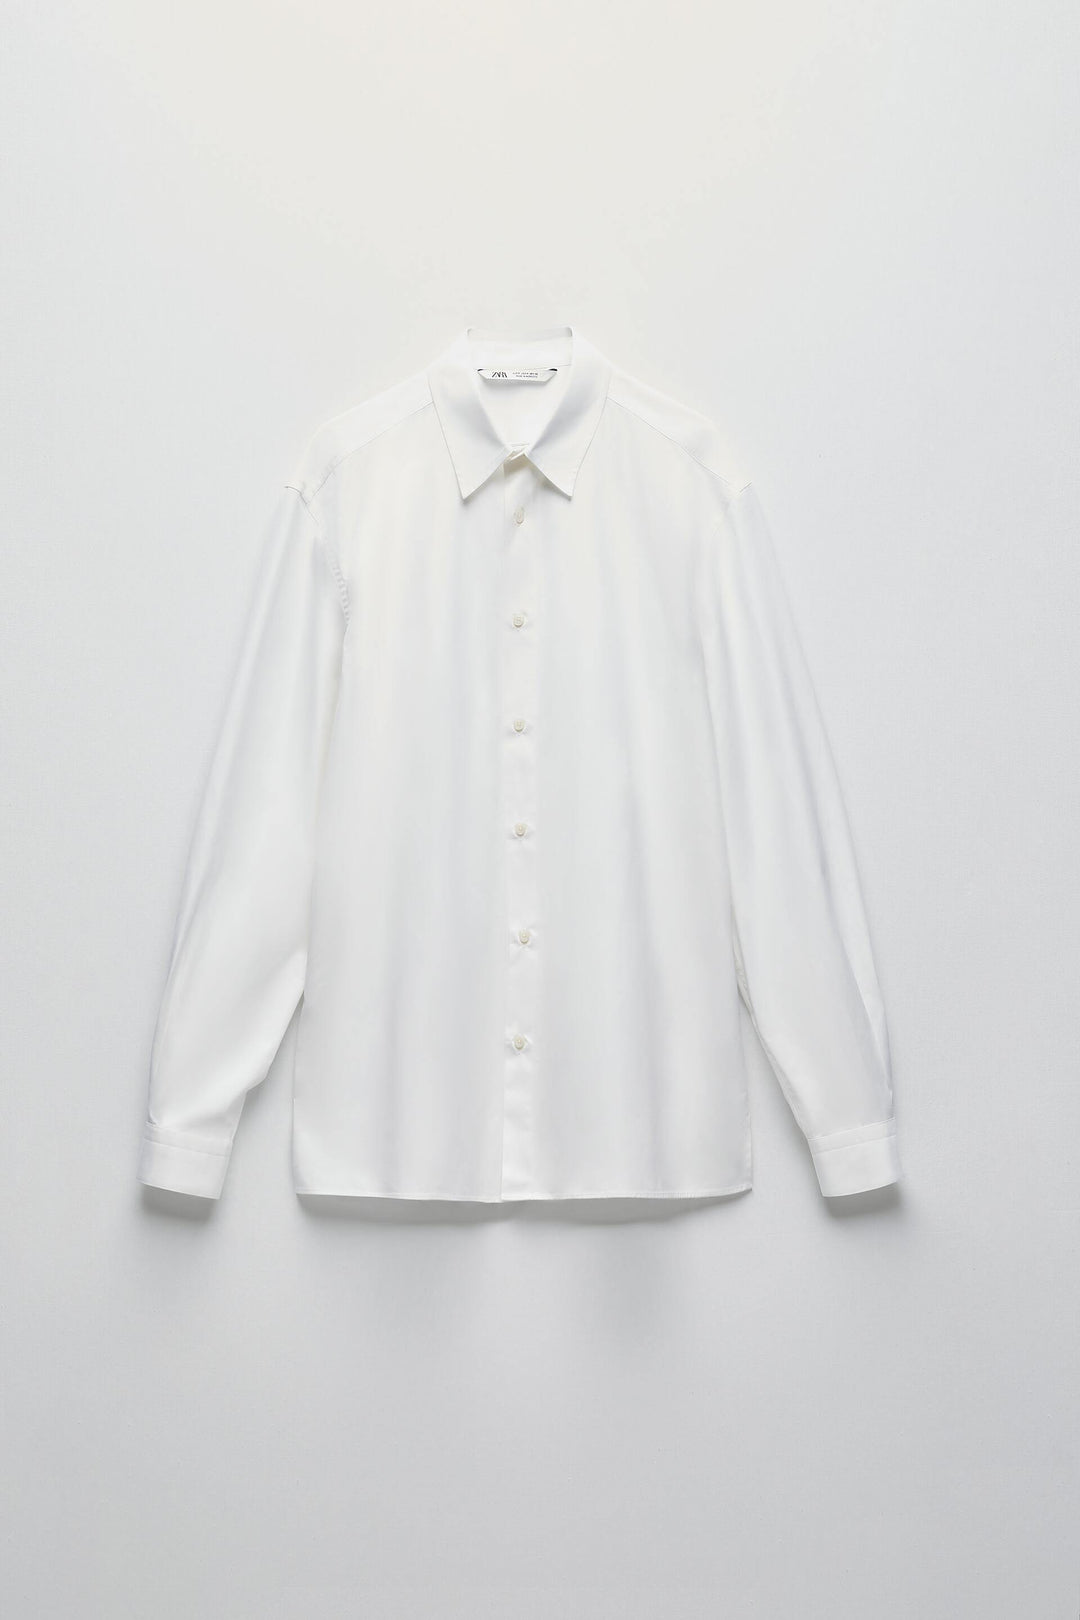 ZaraMan Casual L/S Plain Shirt 5822/300/250